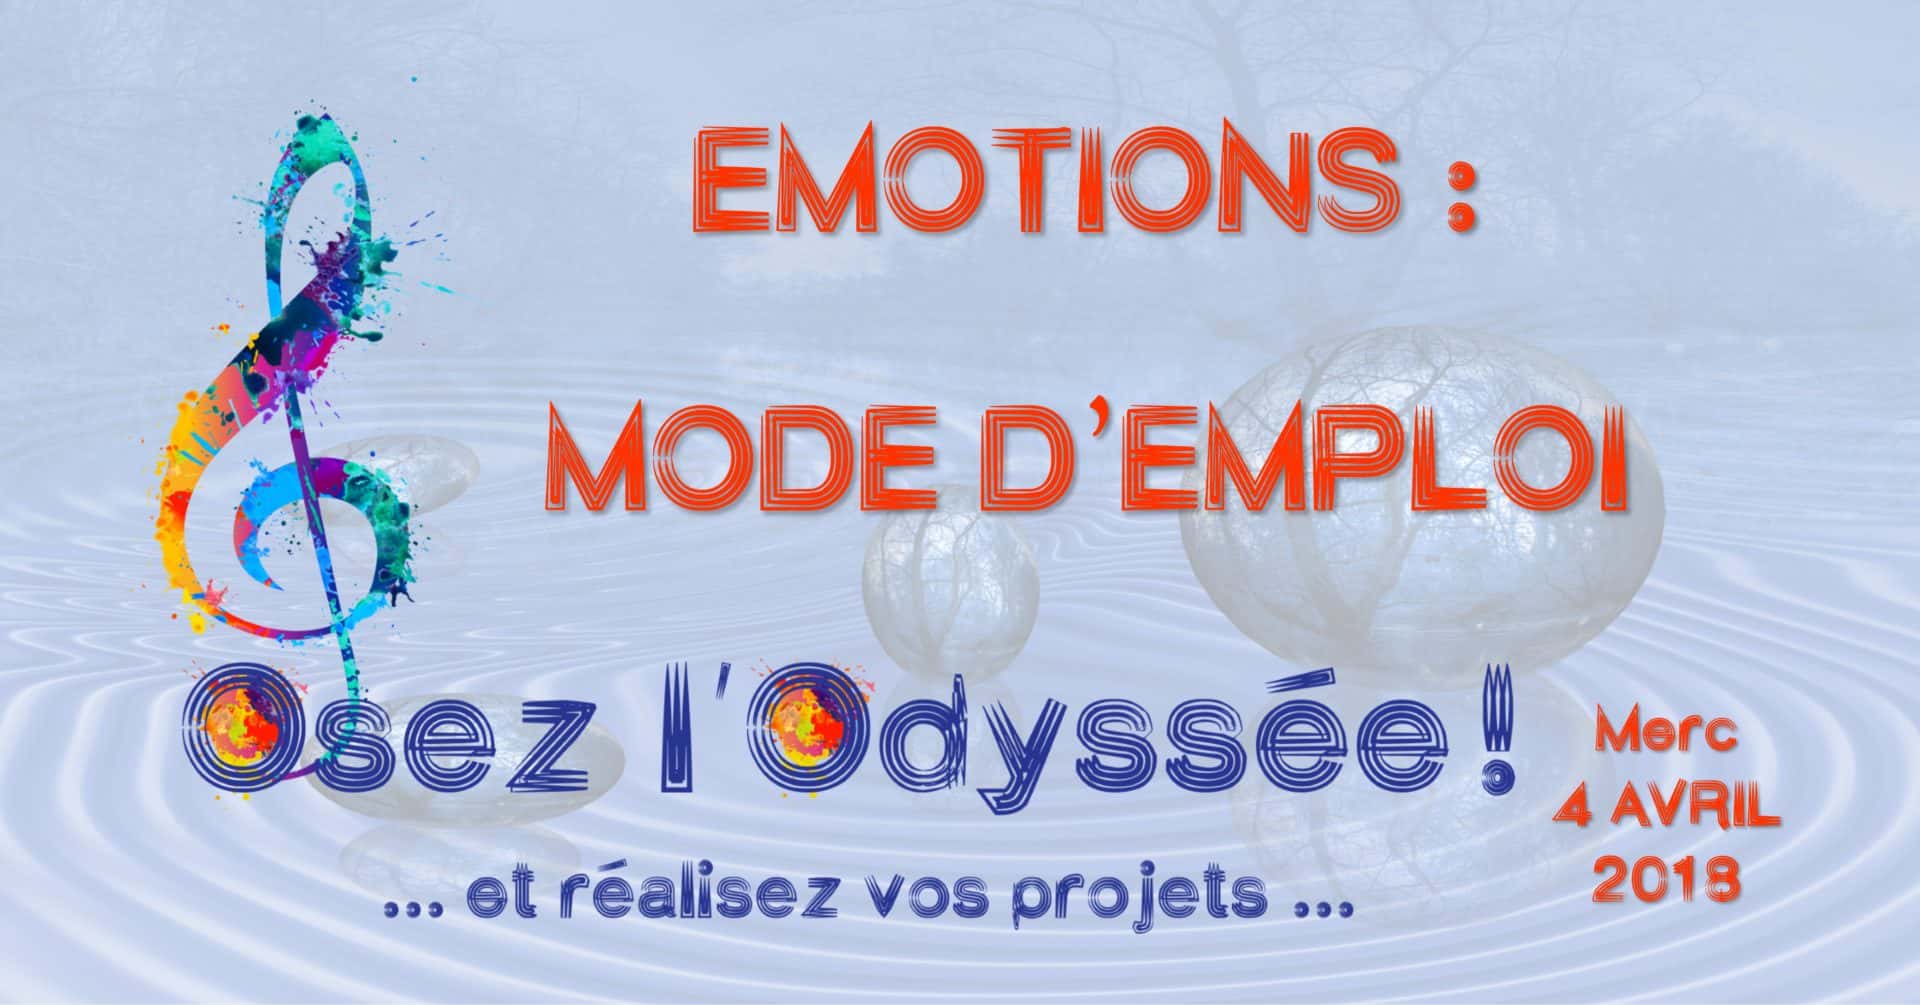 Emotions mode d'emploi avril 2018 Coaching Osez l'Odyssée